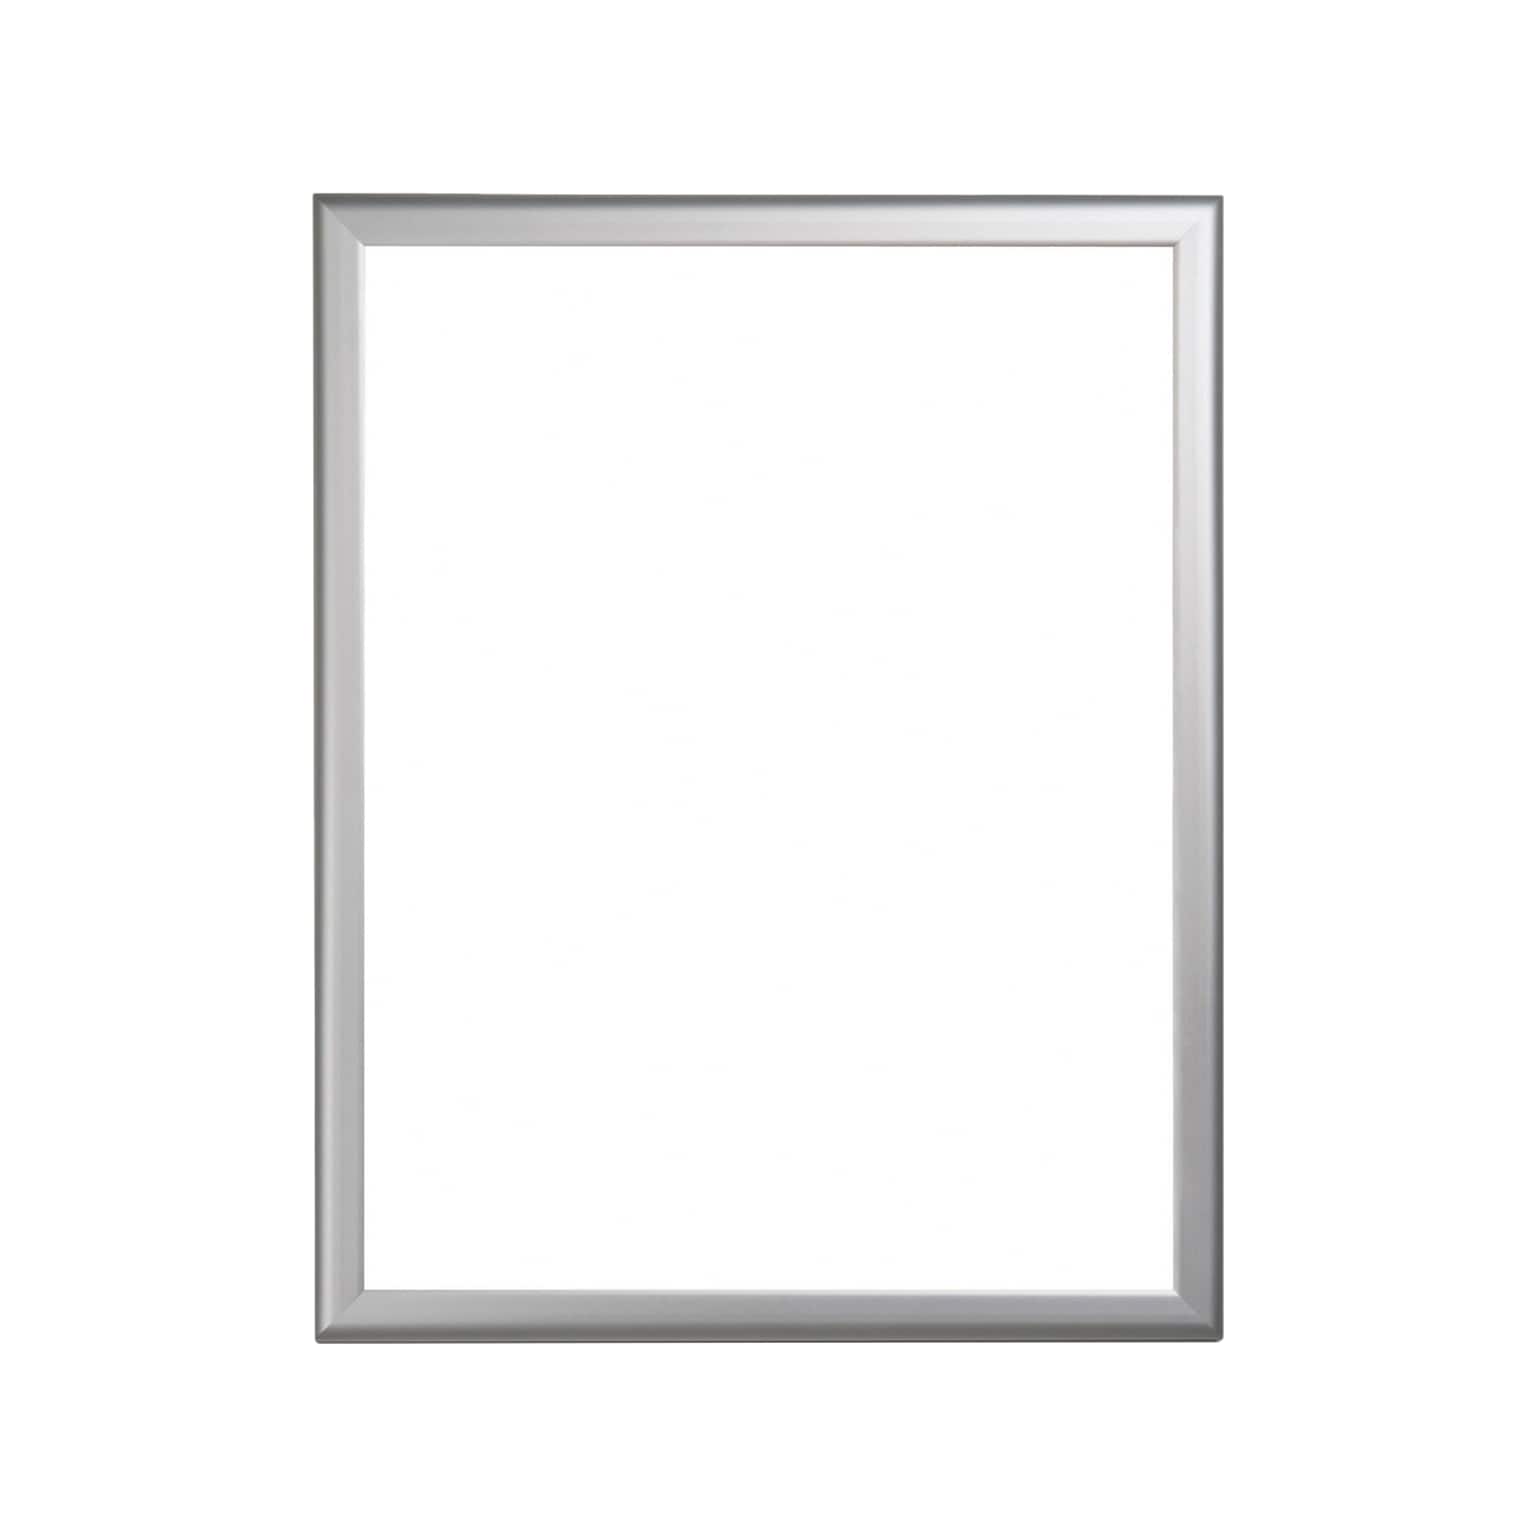 Azar Dry-Erase Whiteboard, Aluminum Frame, 30 x 24 (300229)